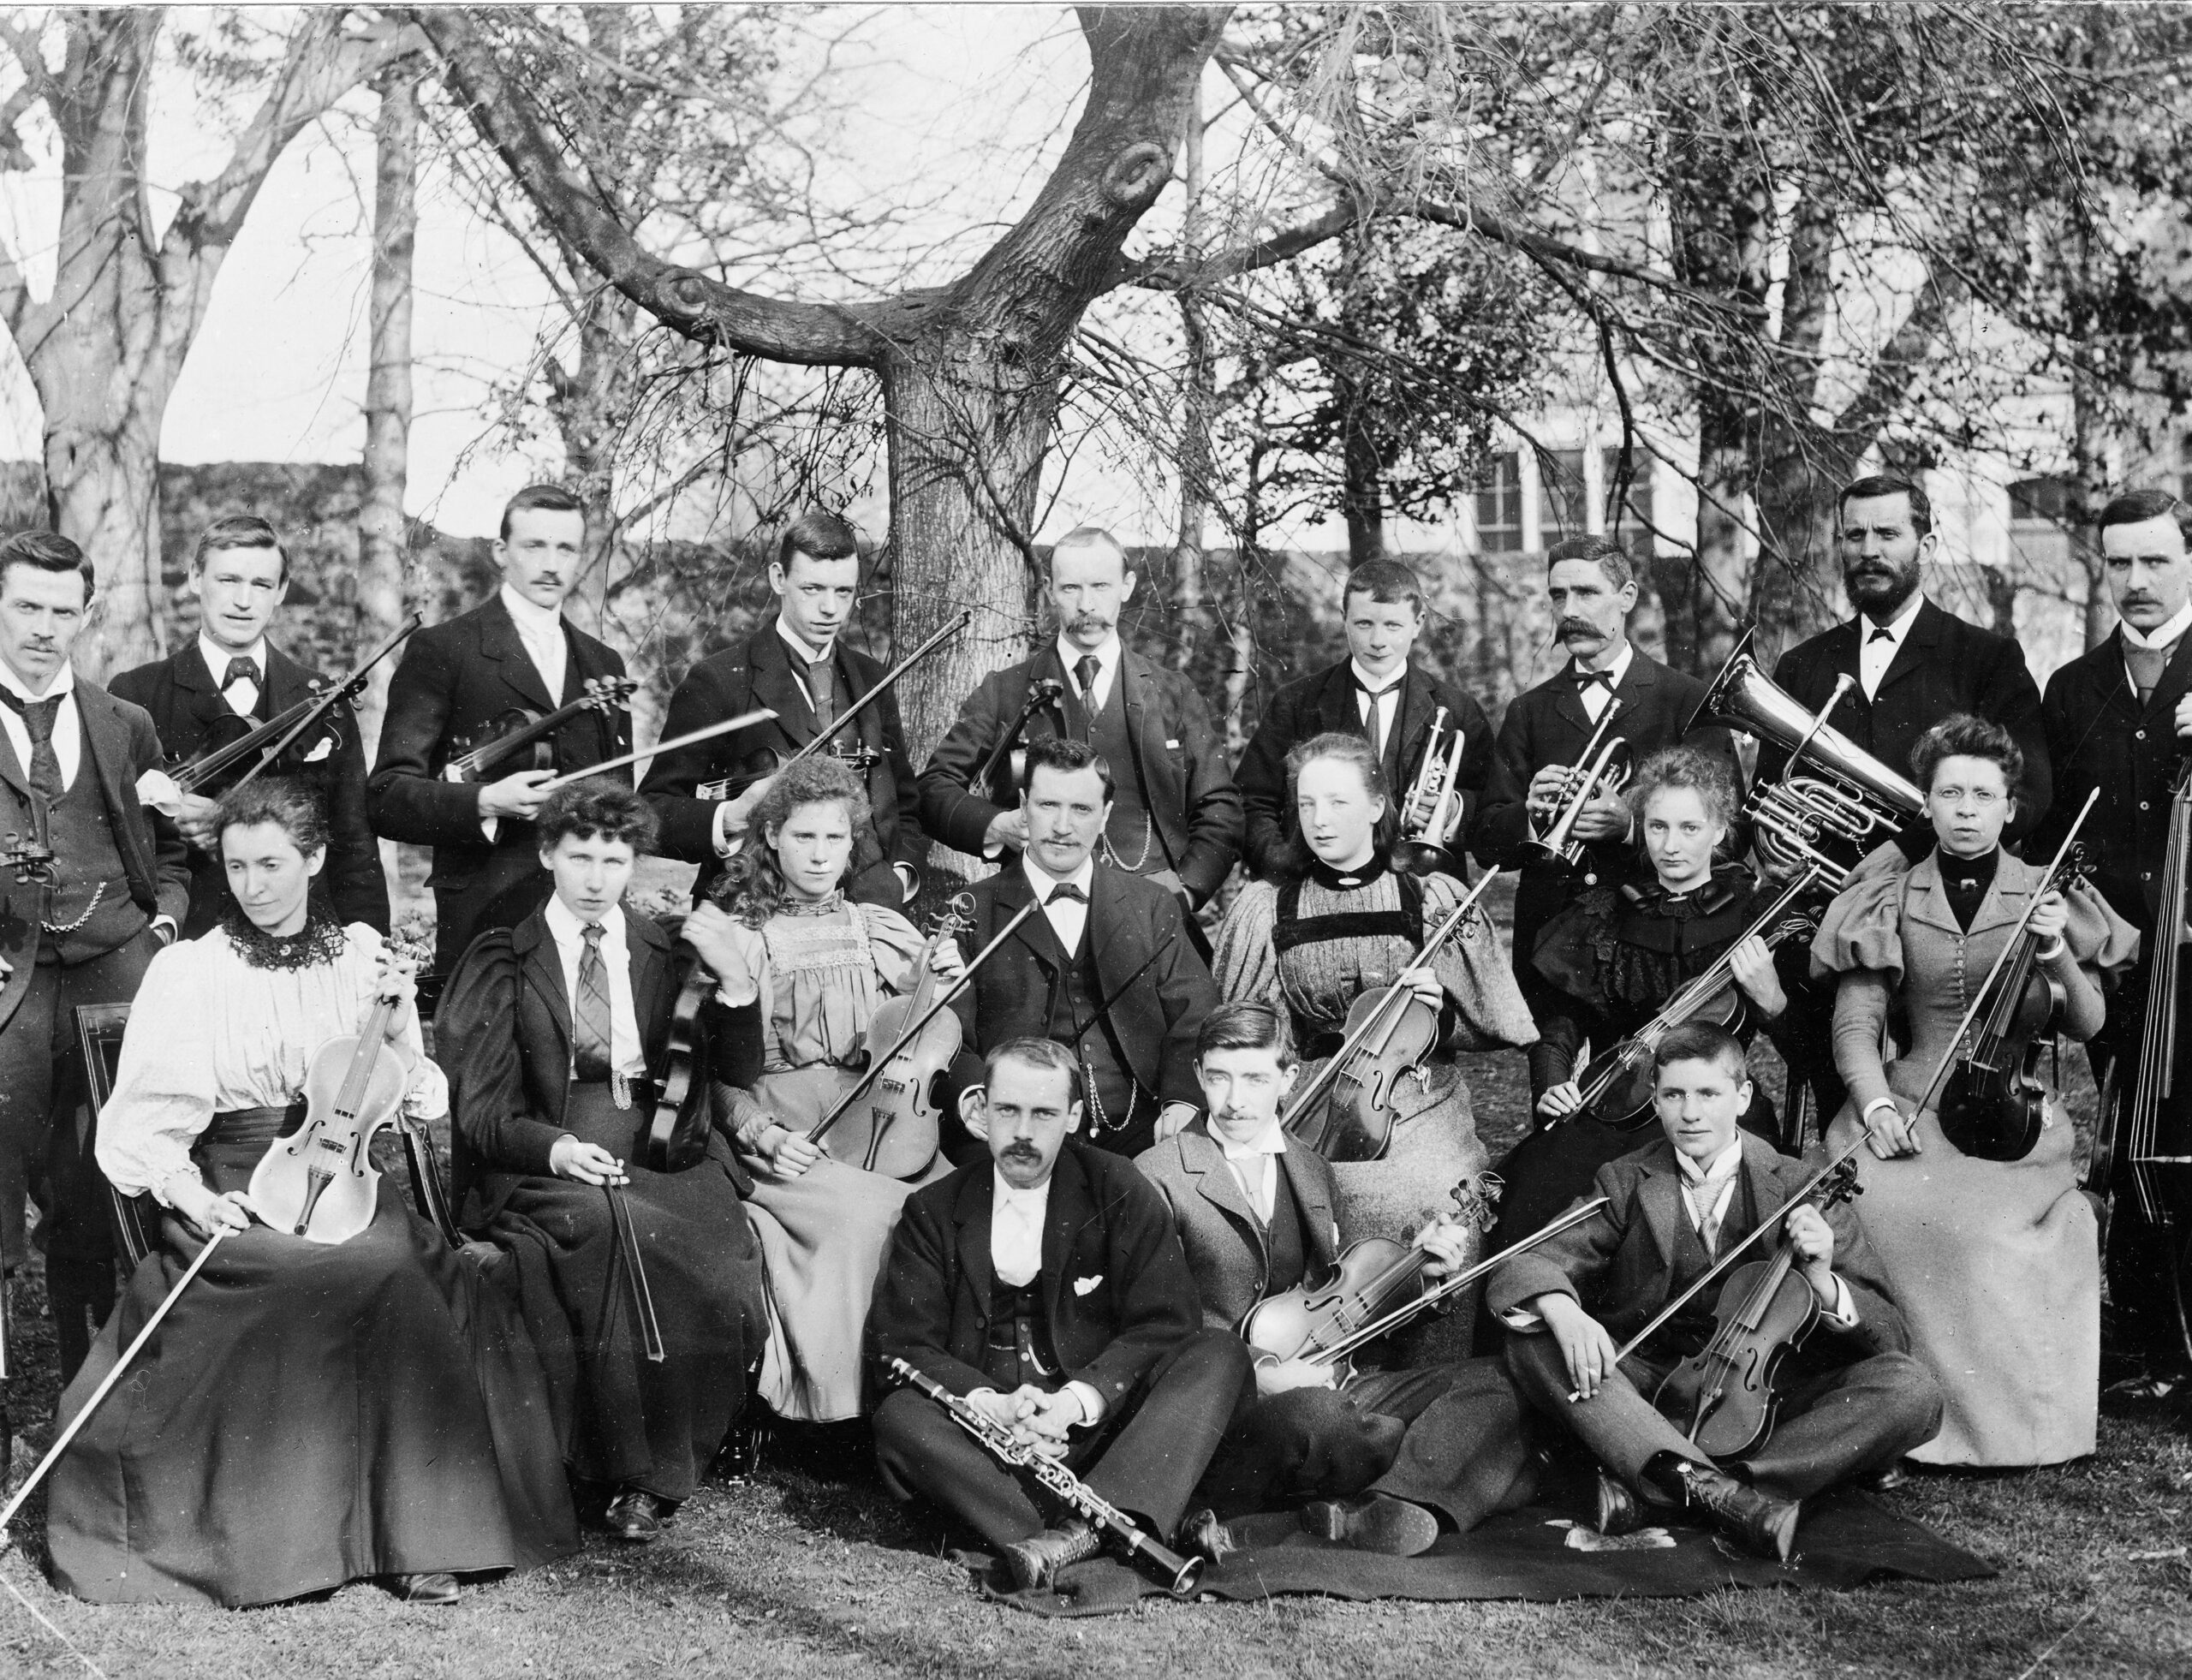 Tayport Heritage Trail - Board 11 - Tayport Orchestra early 1900s